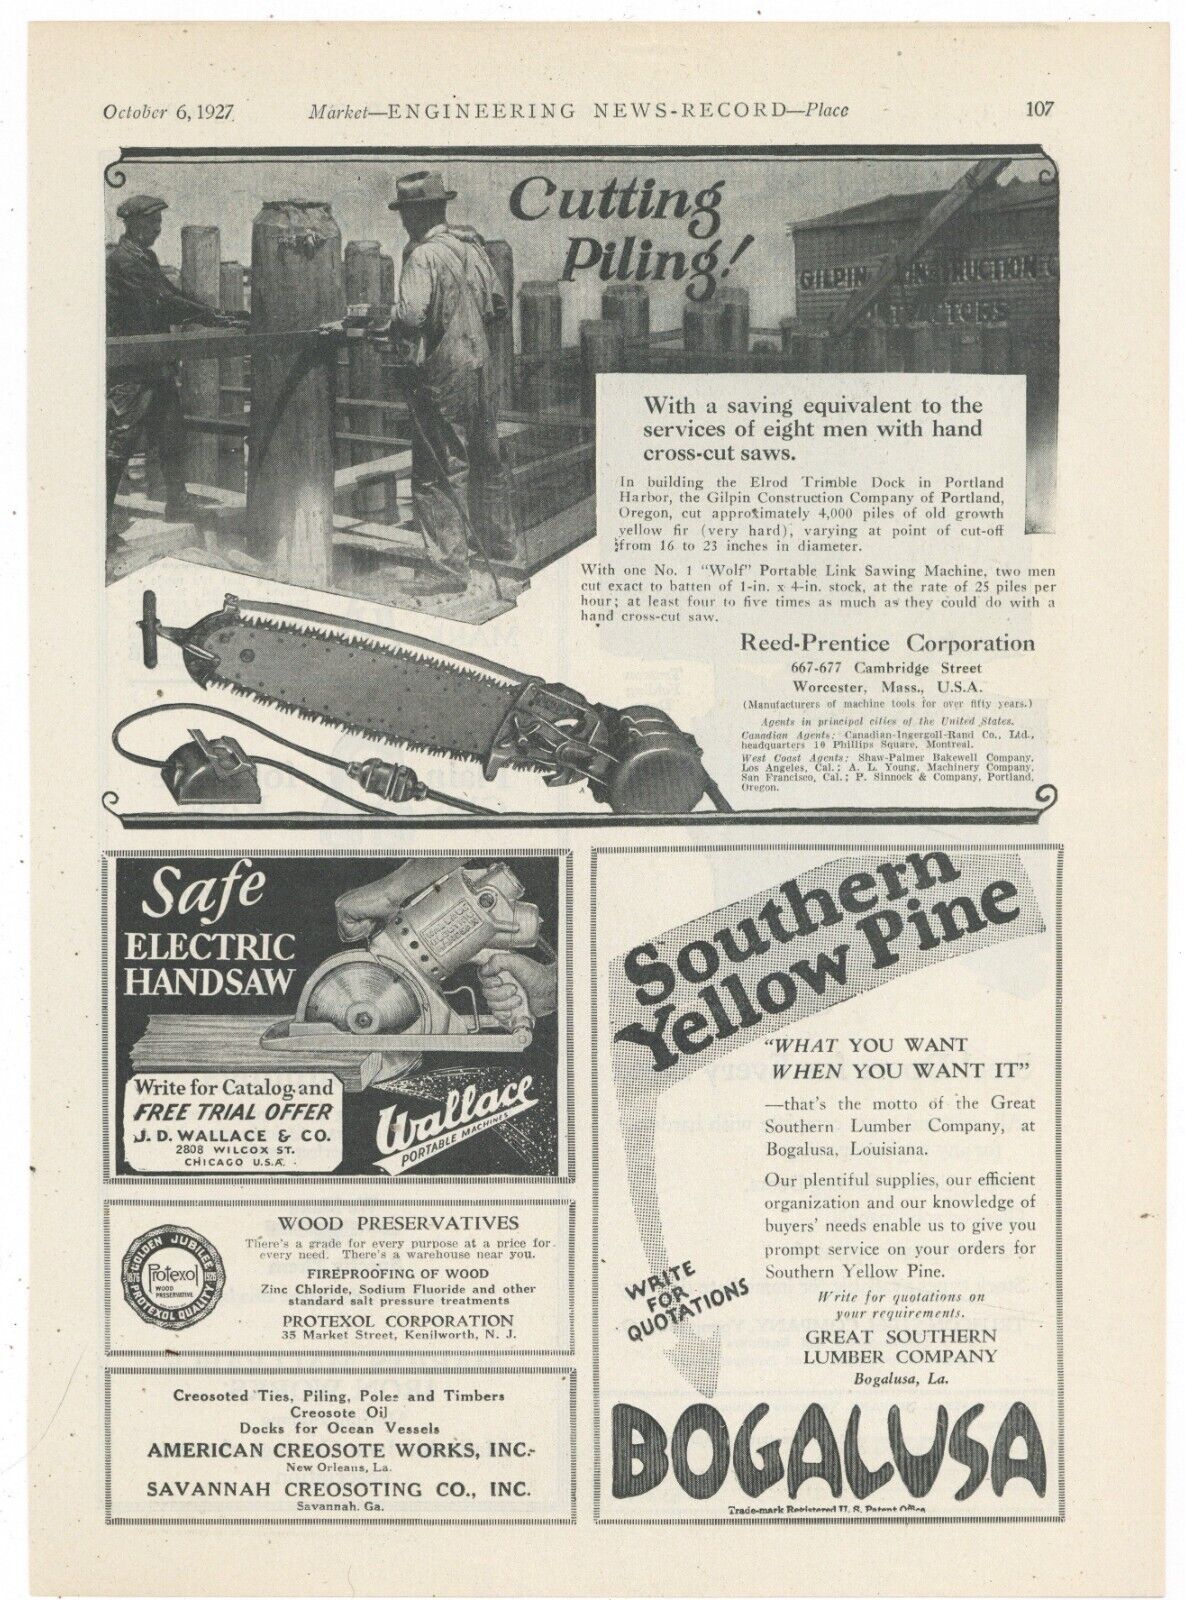 1927 Reed Prentice Ad: Elrod Trimble Dock in Portland, Oregon w/ Wolf No. 1 Saw